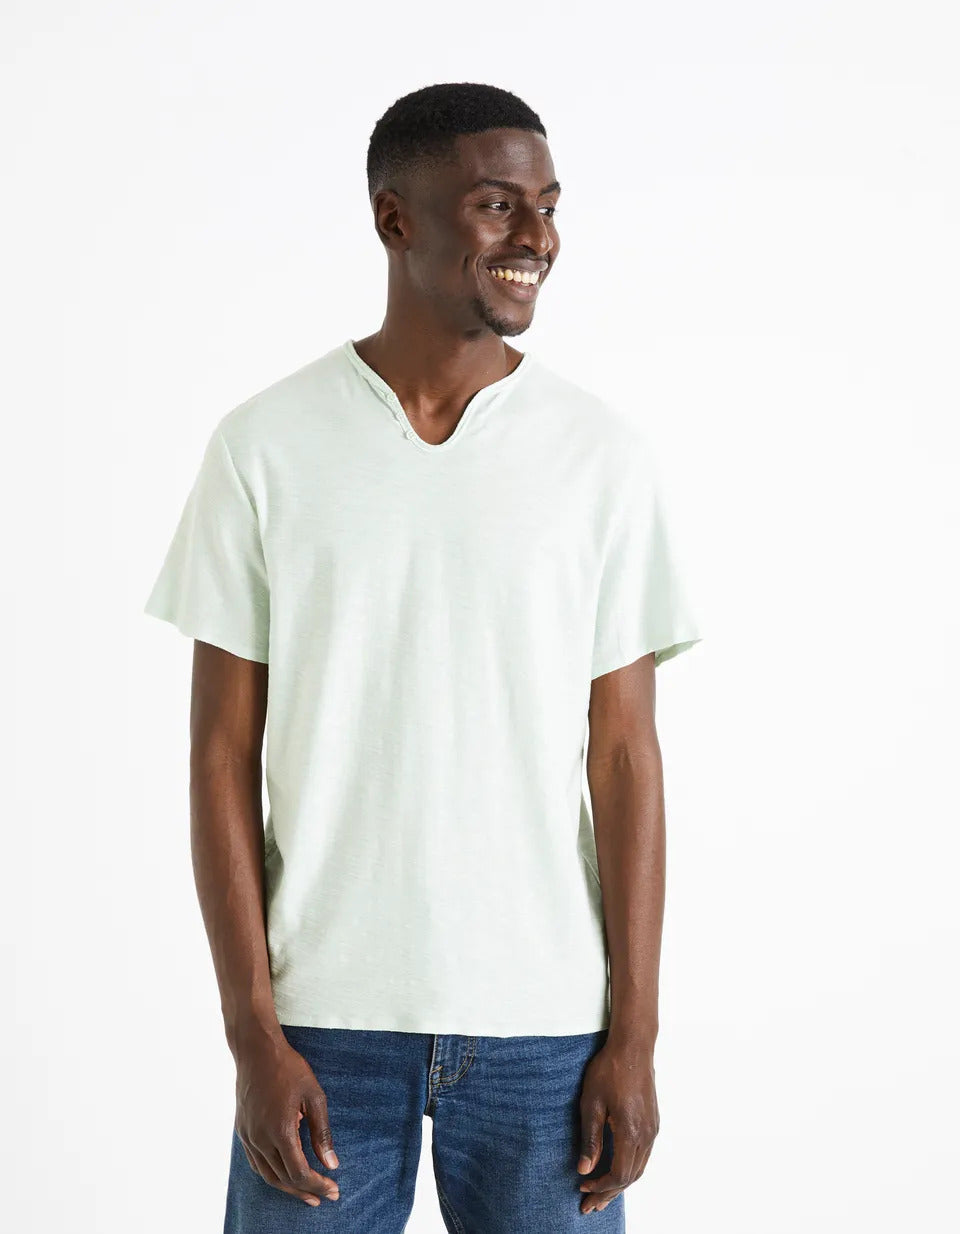 Tunisian Neck T-Shirt 100% Cotton - Green - 02